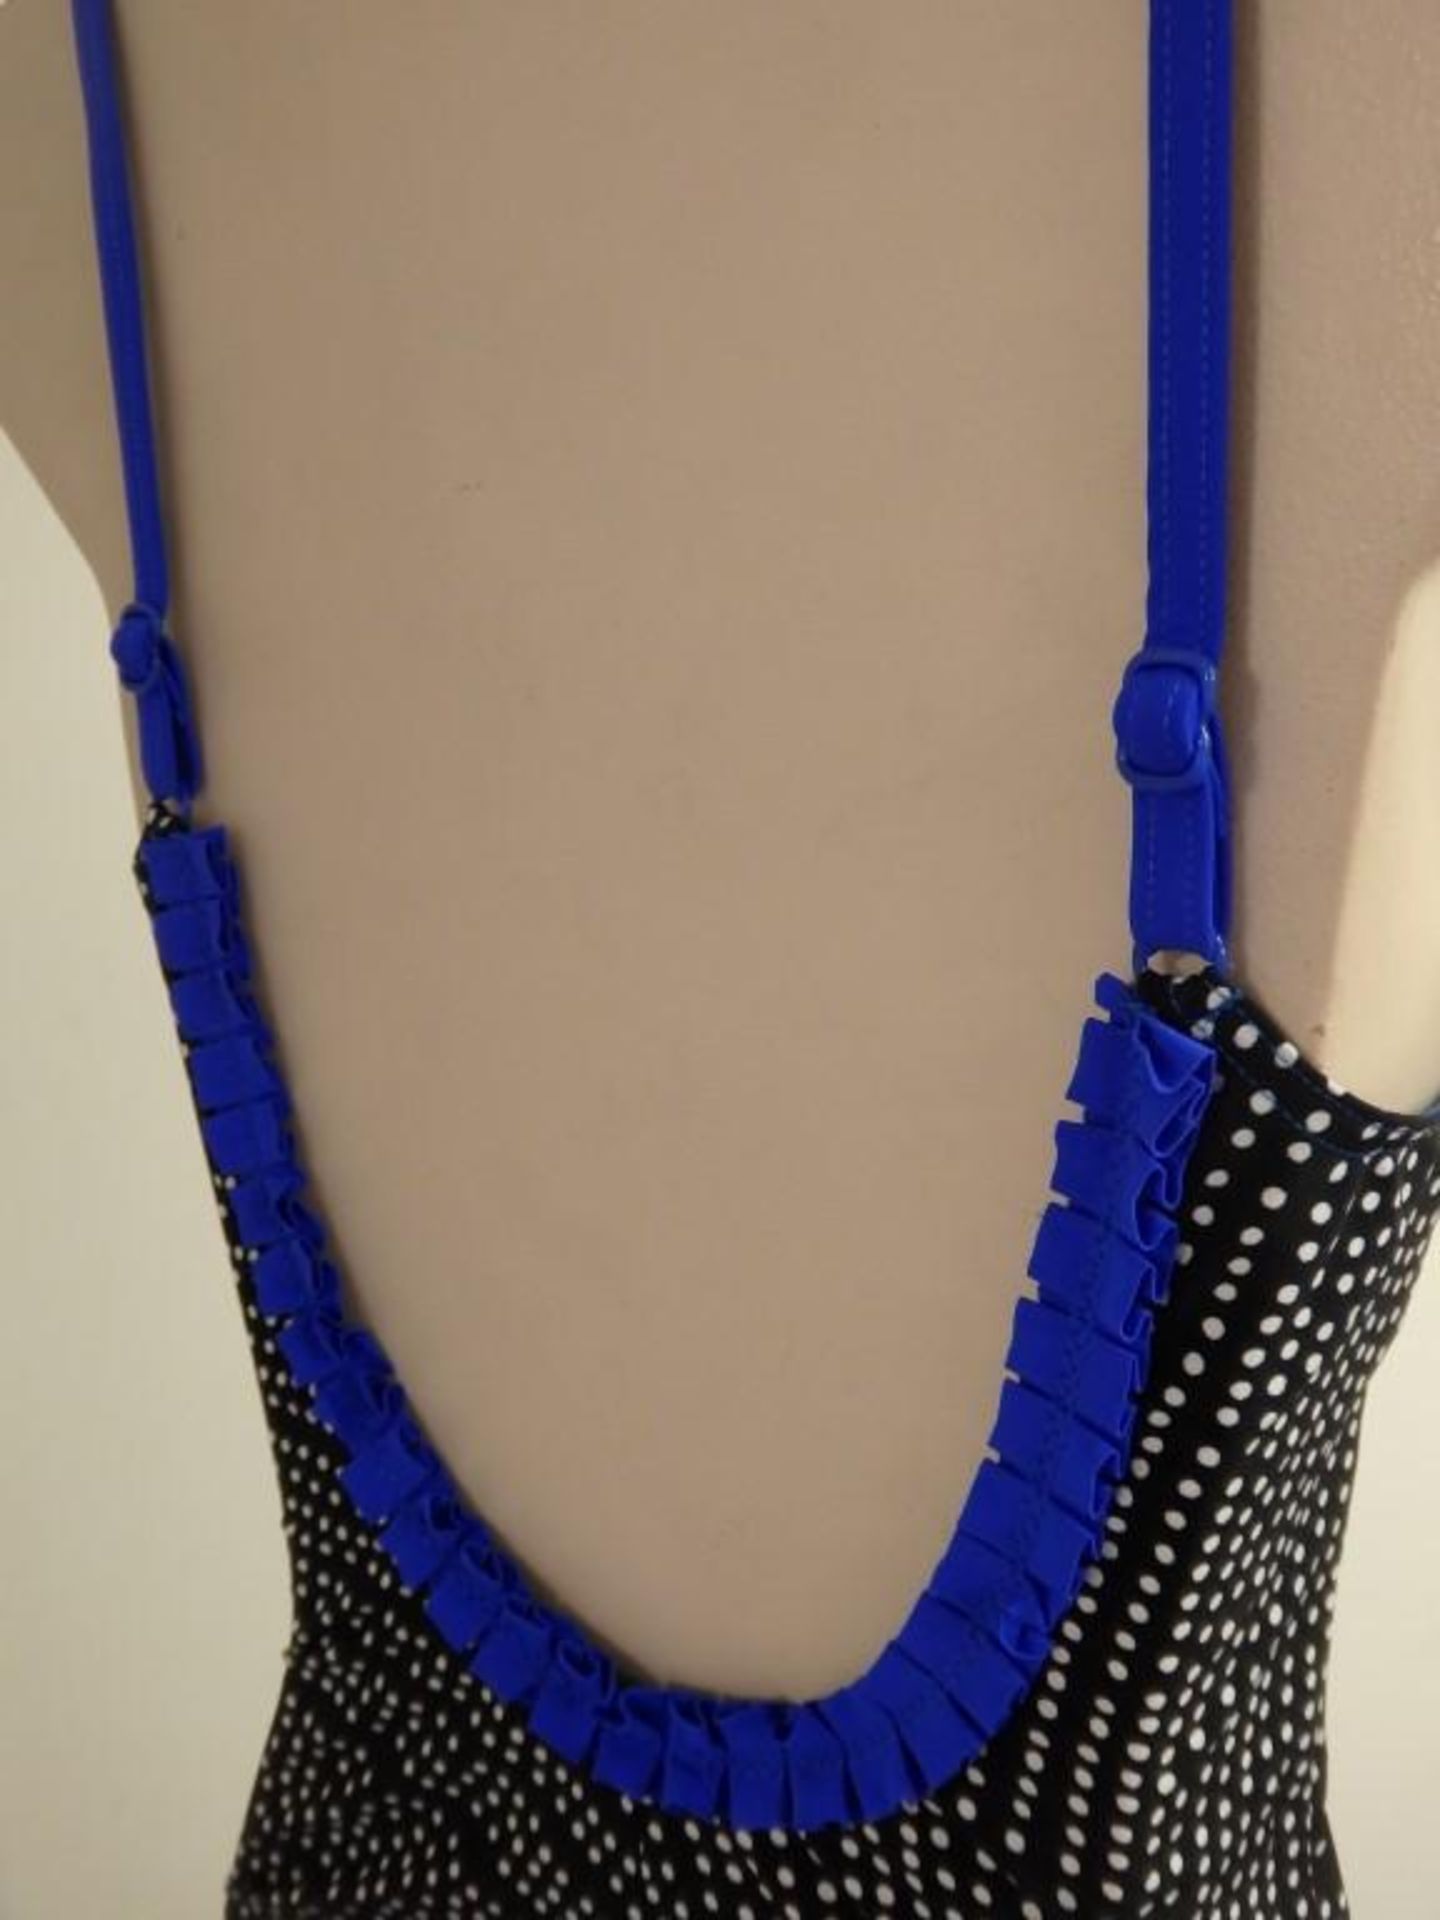 1 x Rasurel - Black Polka dot with royal blue trim &frill Tobago Swimsuit - B21039 - Size 2C - UK 32 - Image 7 of 8